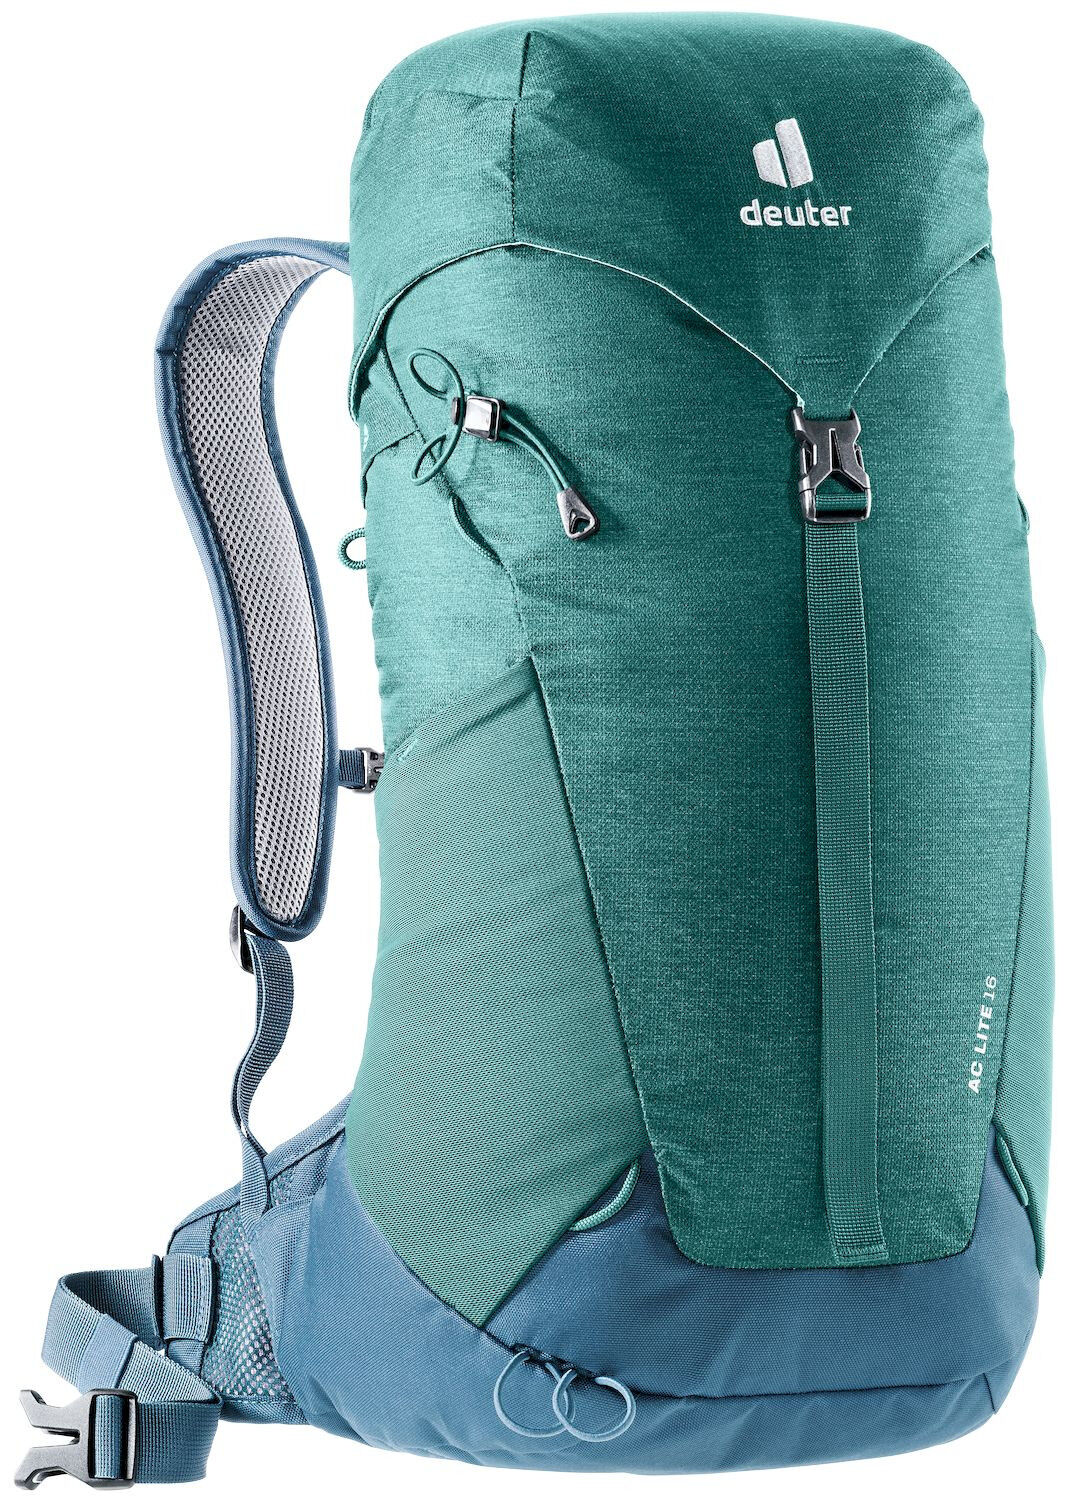 Deuter AC Lite 16 - Walking backpack - Men's